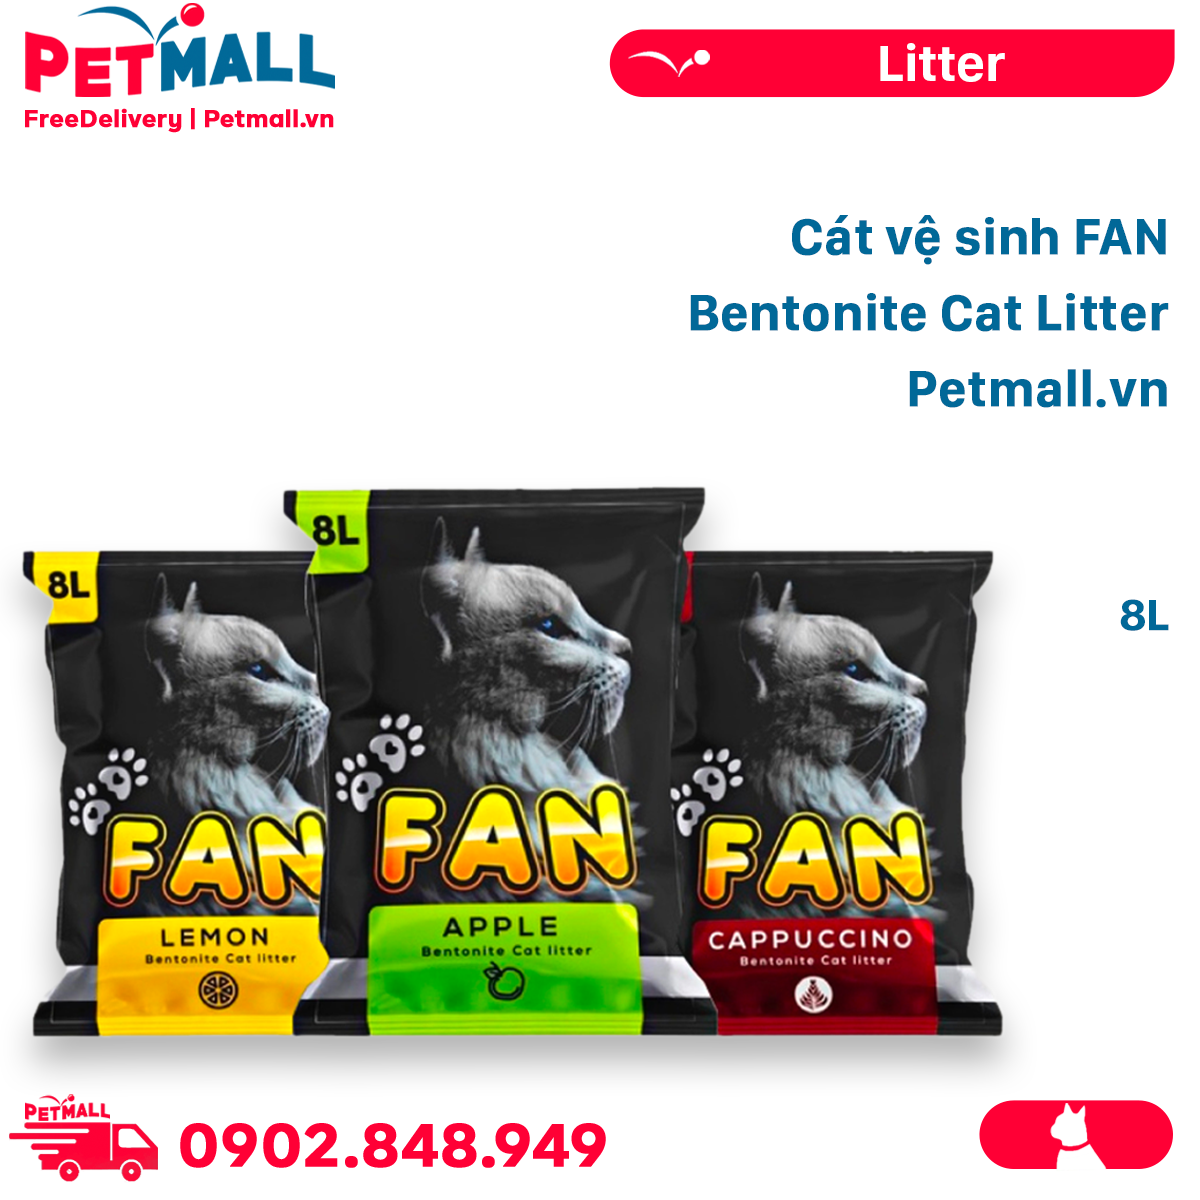 Cát vệ sinh FAN Bentonite Cat Litter 8L Petmall